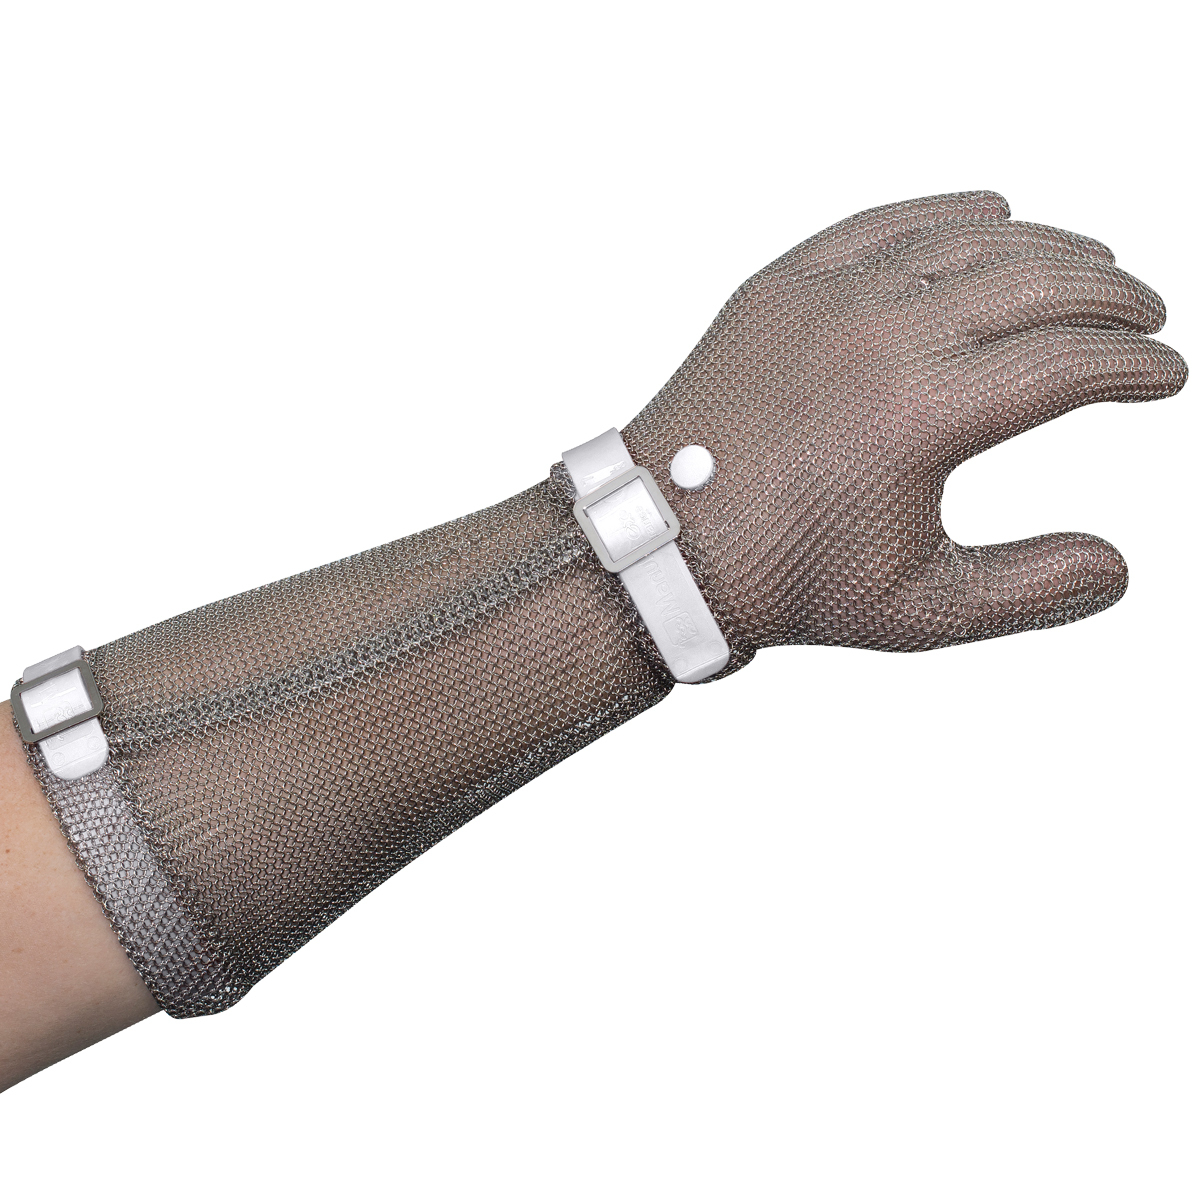 Manulatex Chain Mesh Glove, Long Cuff With Strap